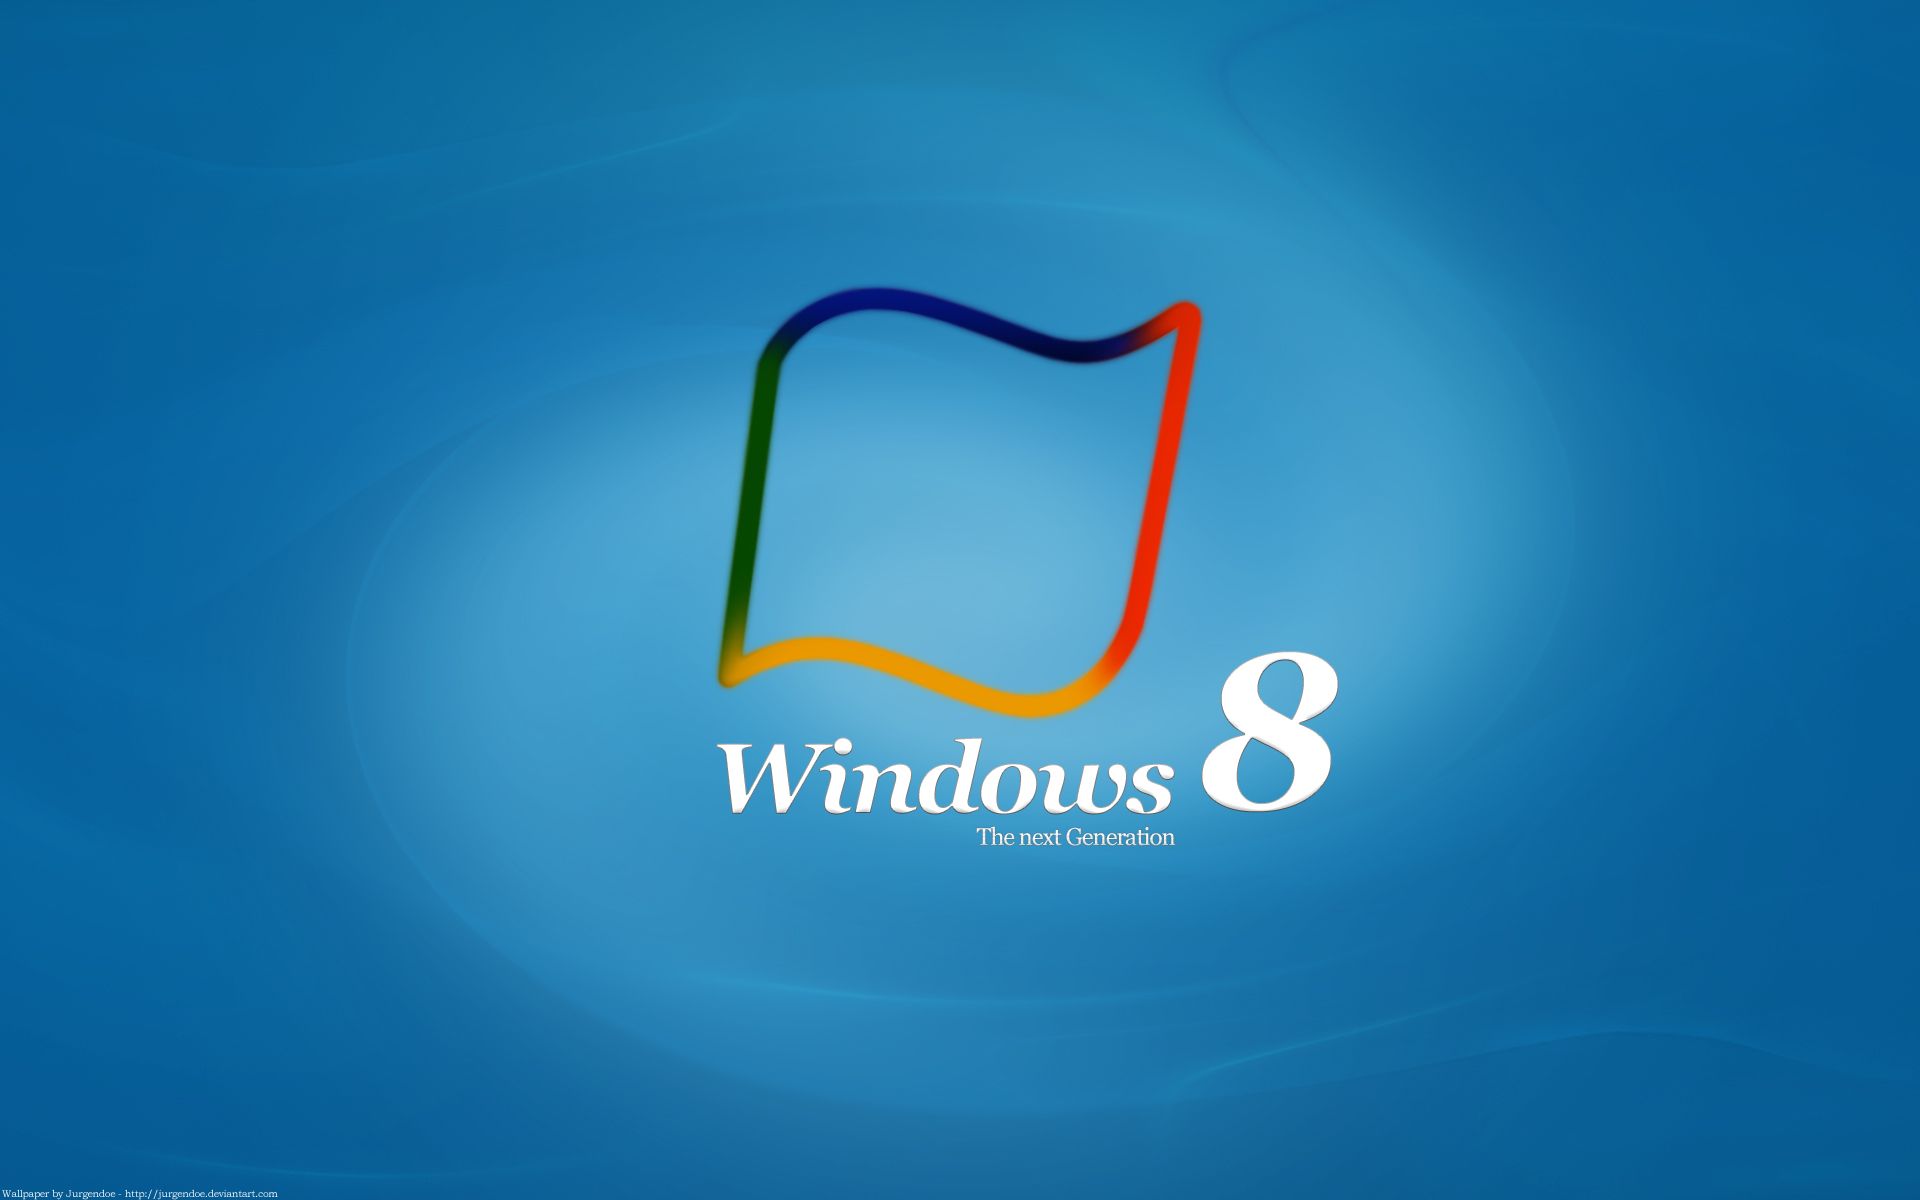 Top 10 Windows 8 wallpapers Free Download 2